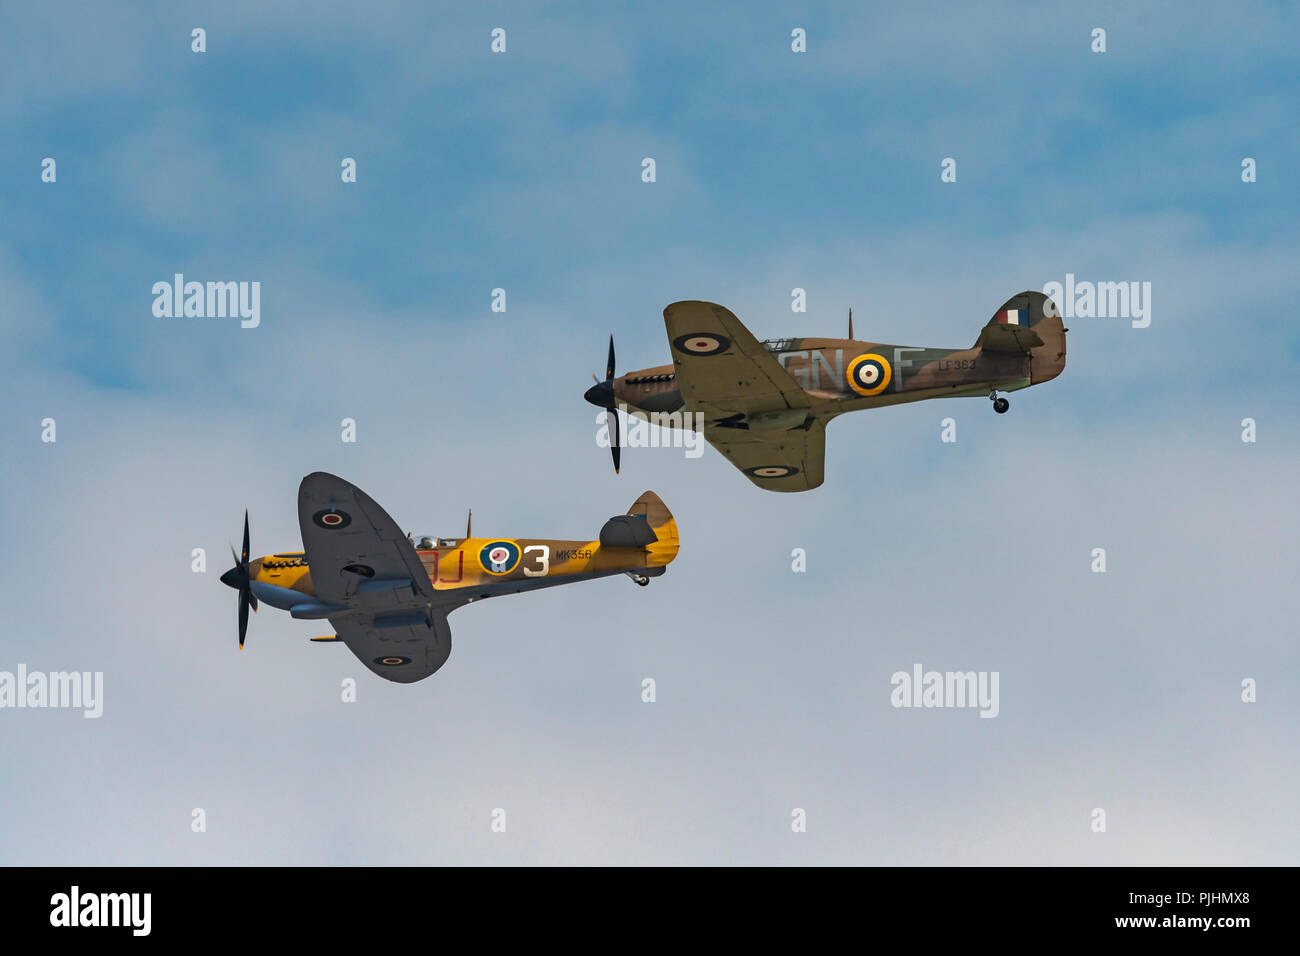 RAF Battle of Britain Memorial Flight, RIAT 2018, RAF Fairford, REGNO UNITO Foto Stock